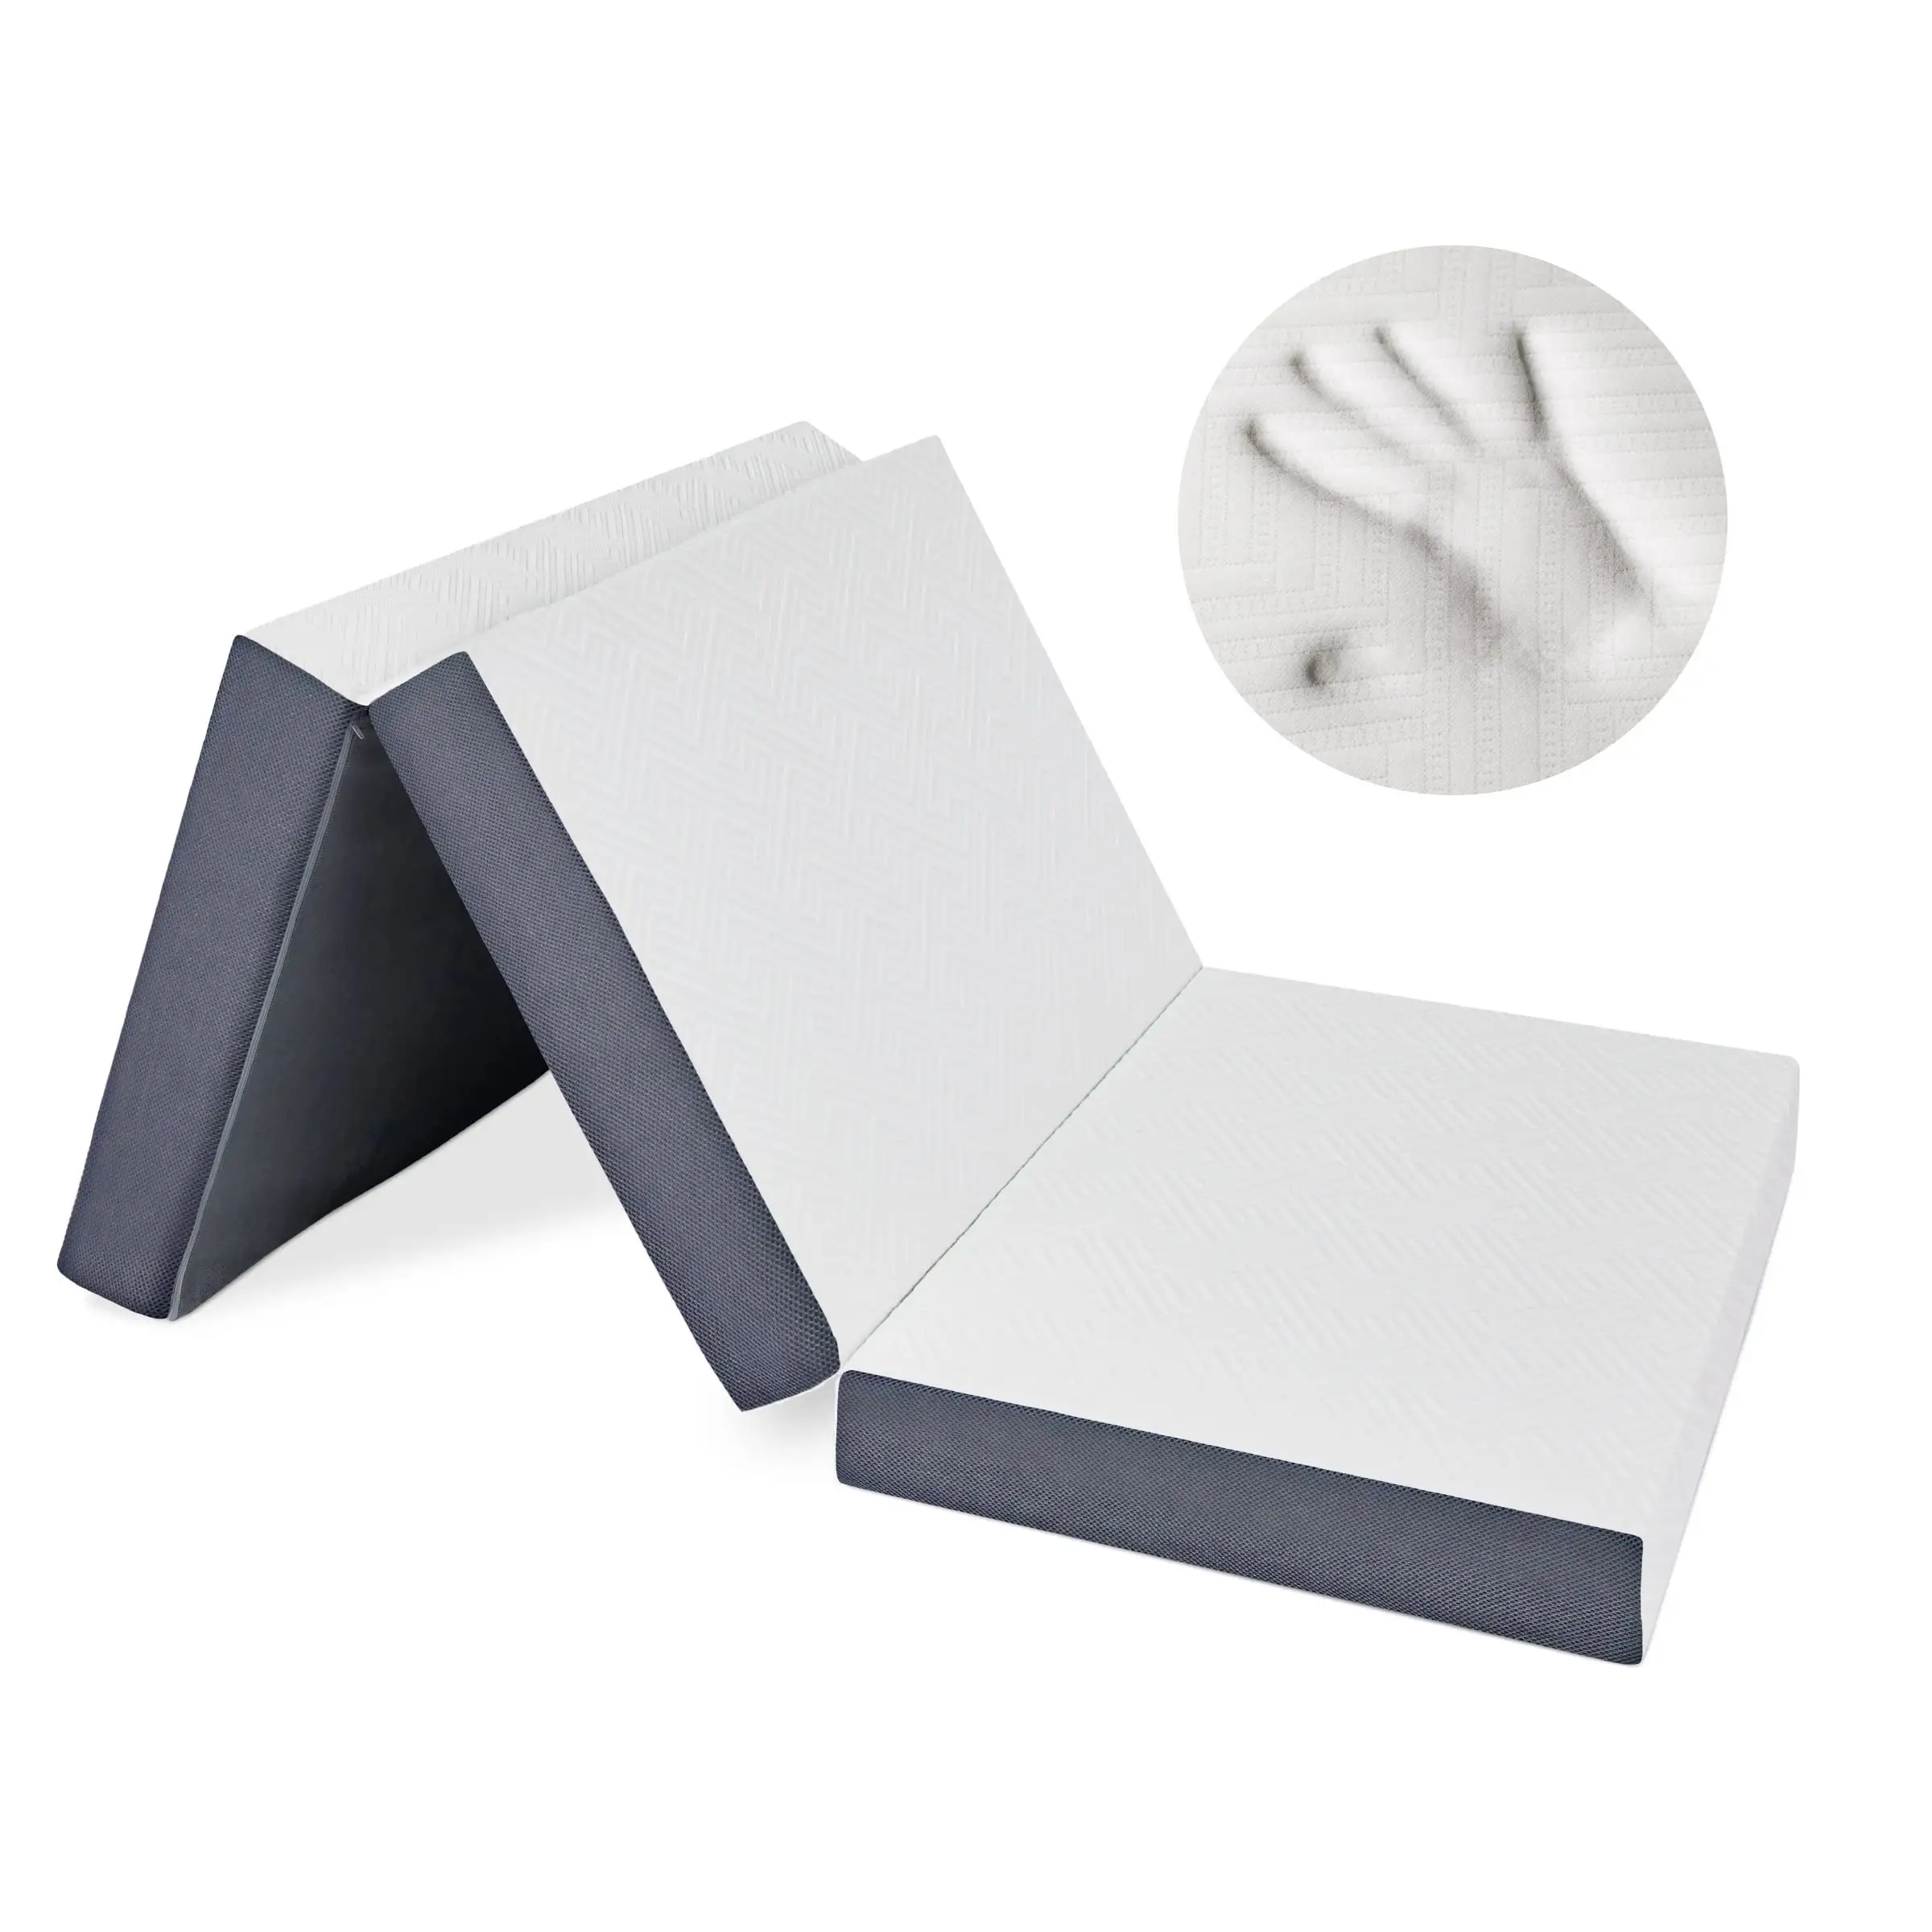 Costom Tri Fold Memory Foam Mattress Full Folding Mattress Washable Cover Travel and Guest Mat Foldable Floor Mattress